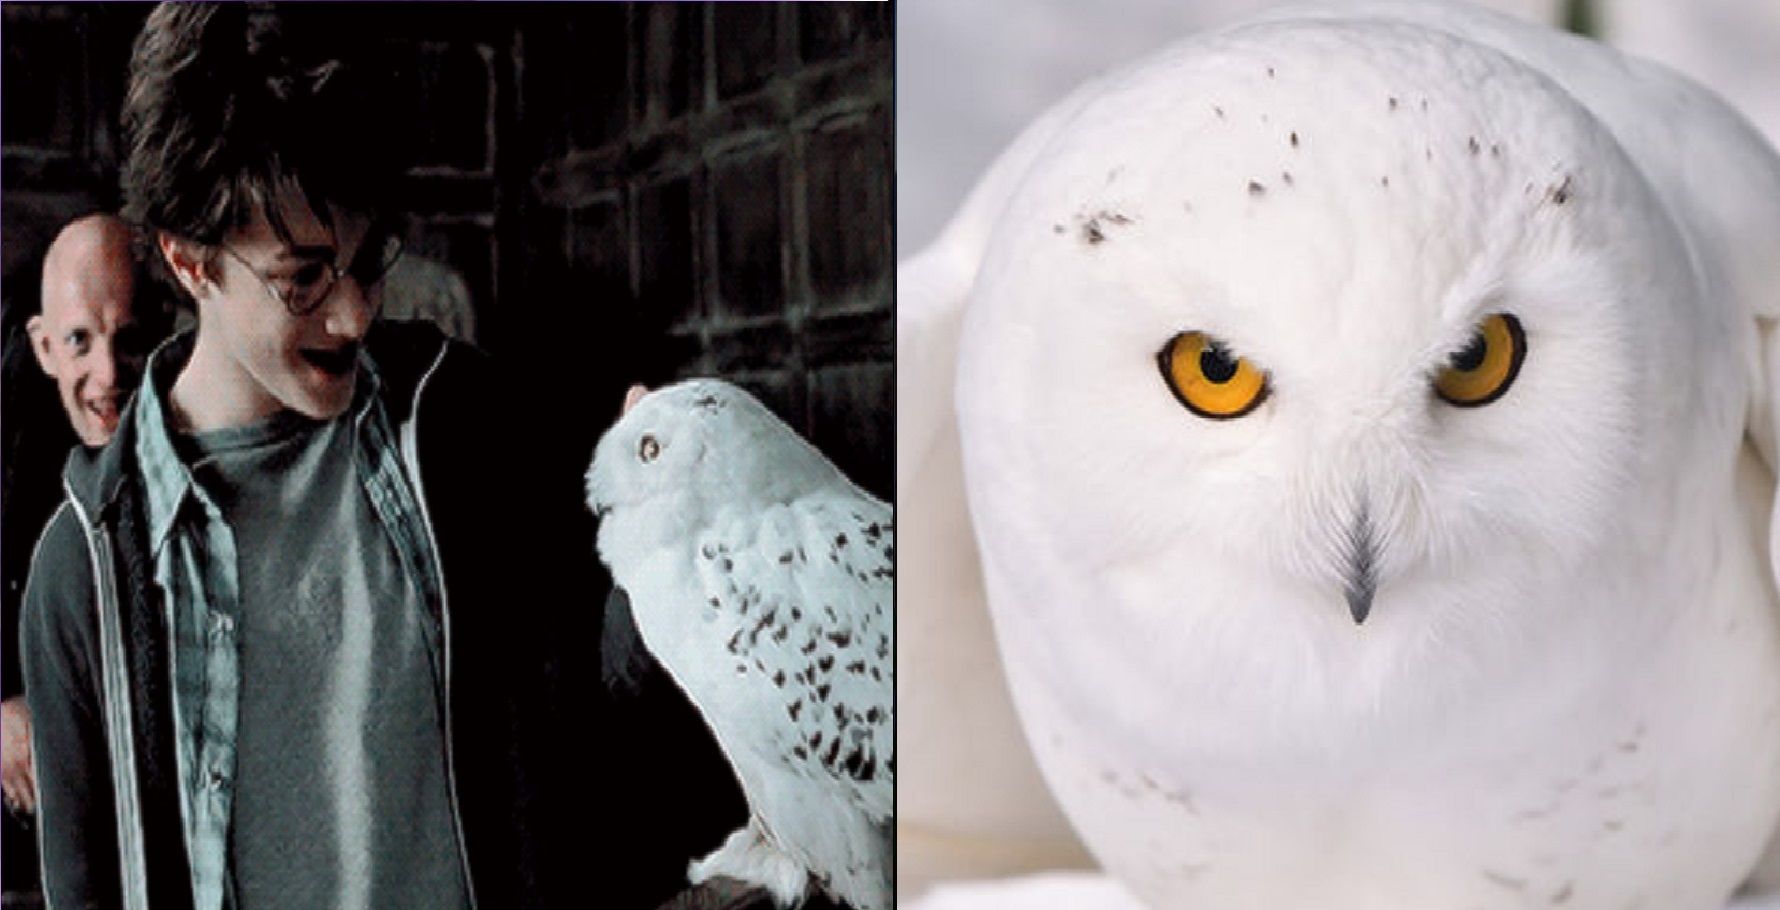 Hedwig, Harry Potter Wiki